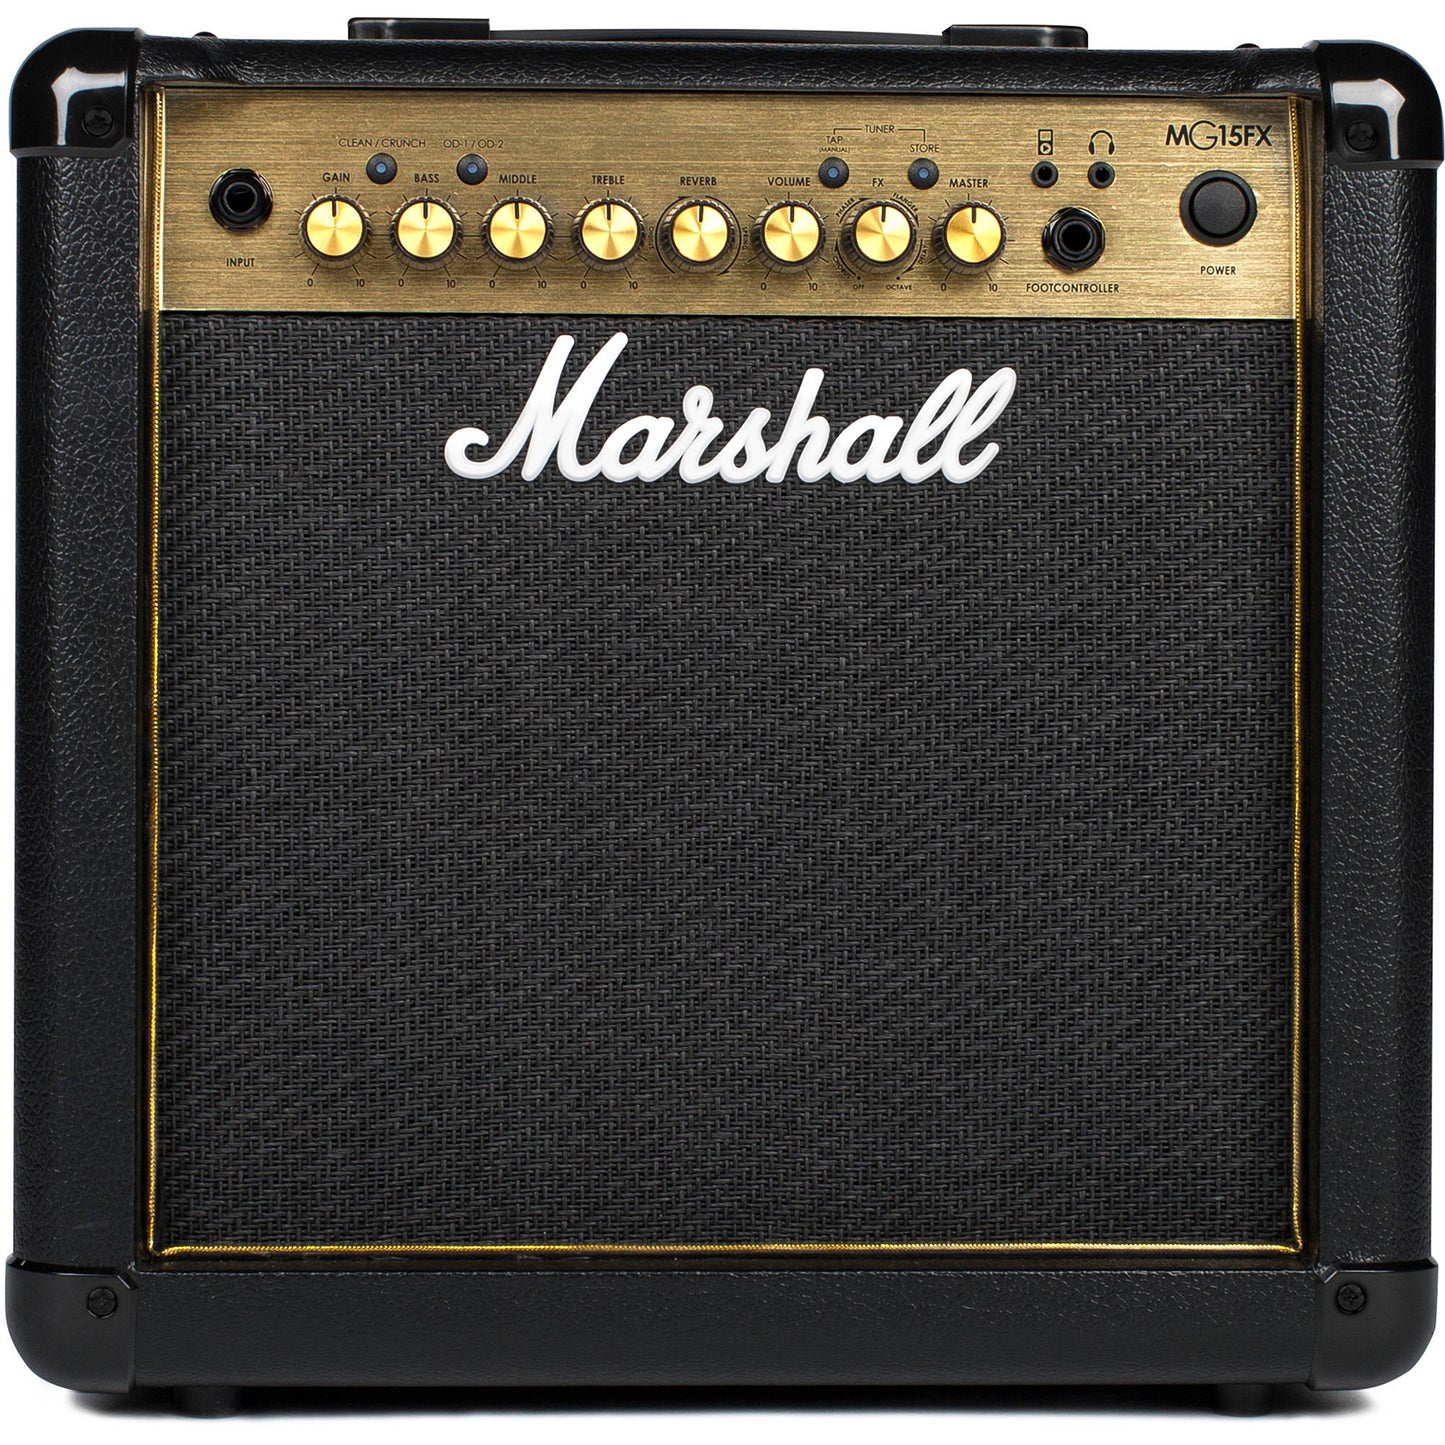 Marshall MG15GFX 15-Watt Combo Guitar Amplifier